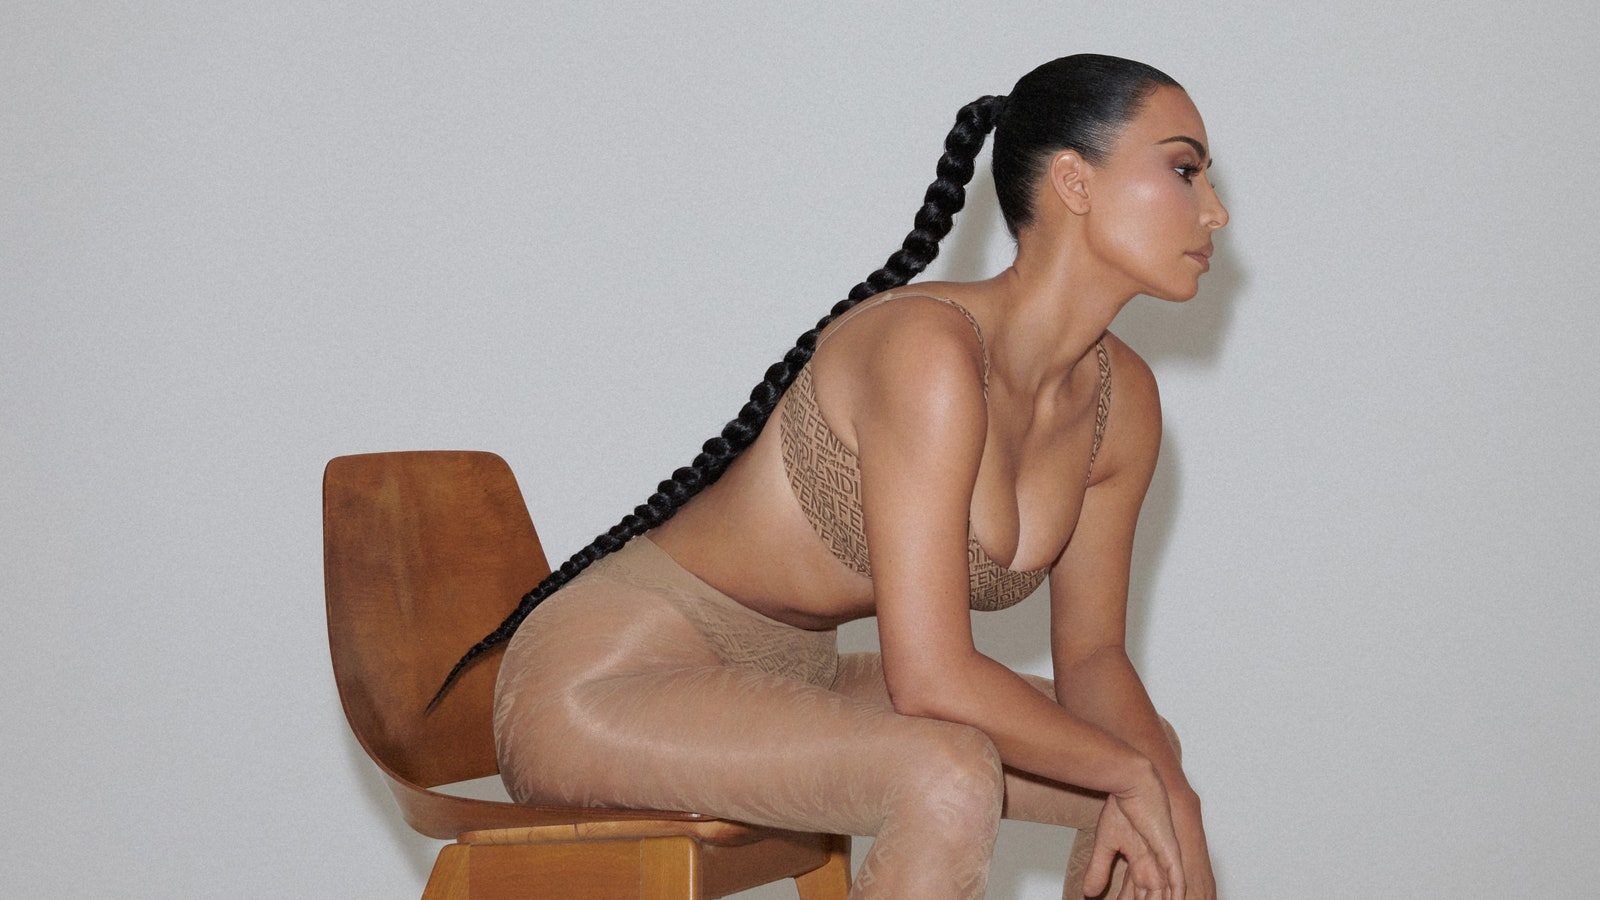 Kim Kardashian's Skims shapewear may be collaborating with Fendi